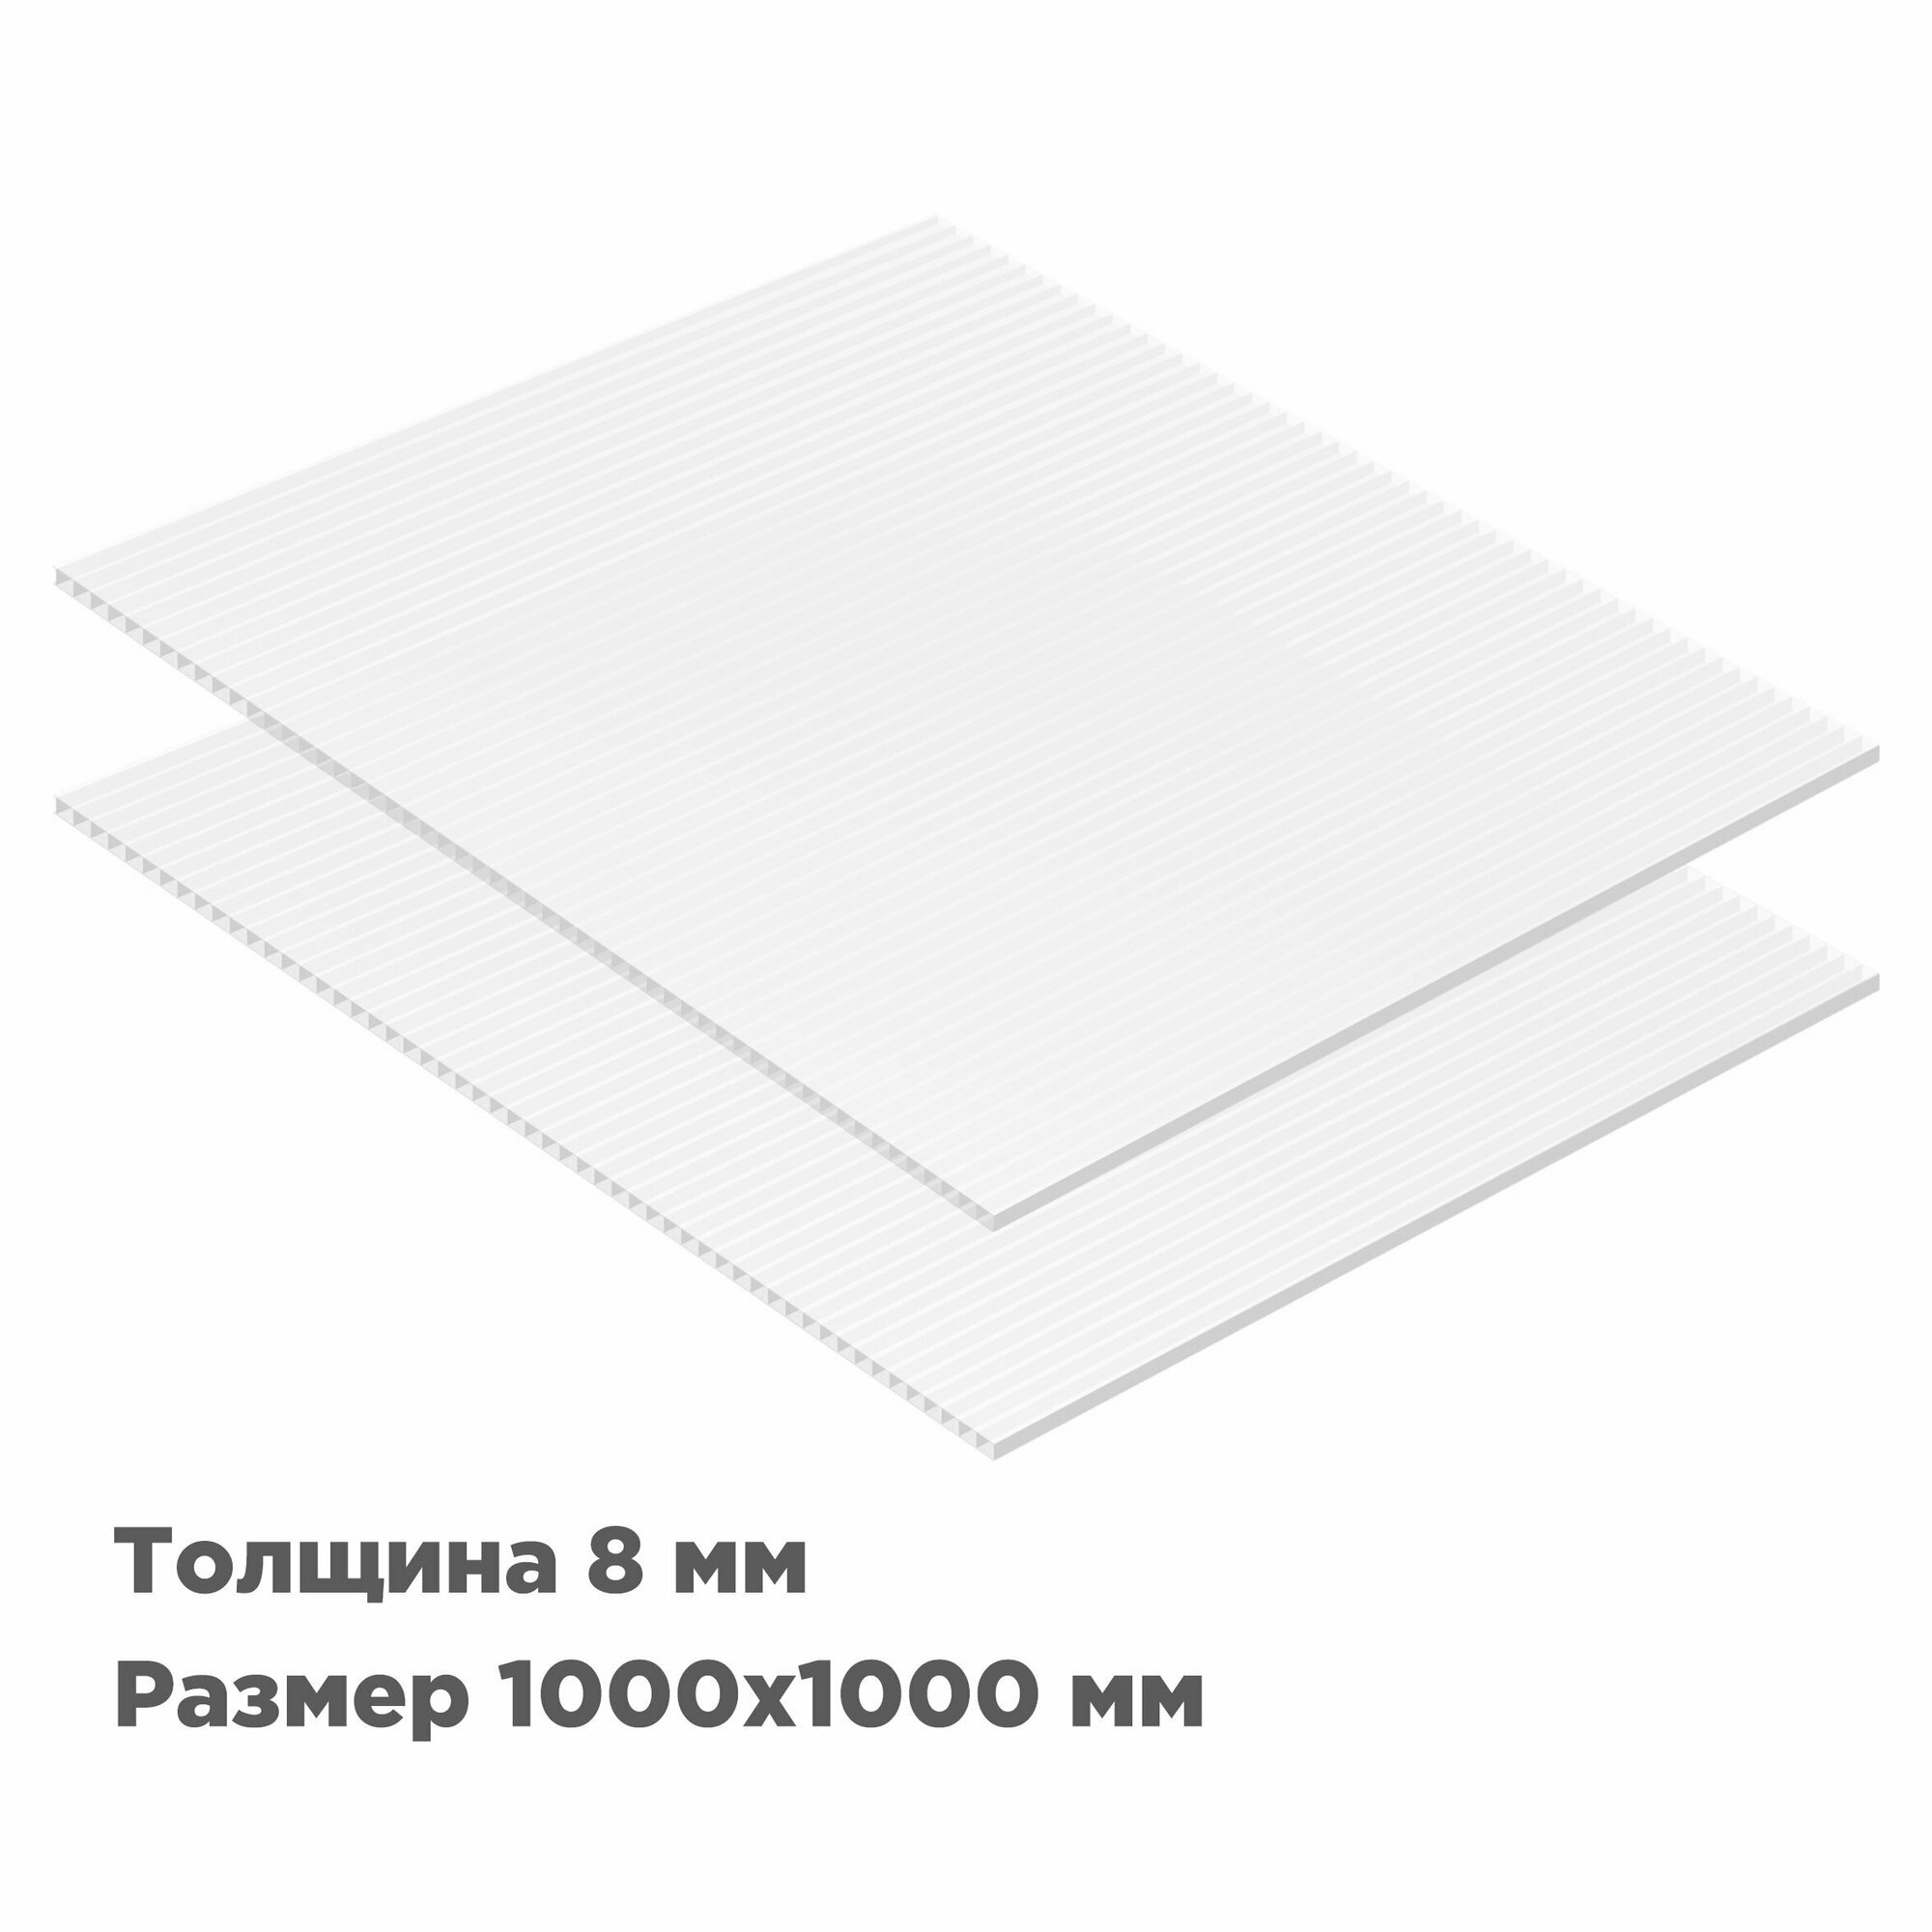 Сотовый поликарбонат Novattro 8мм, 1000x1000мм, белый, 2 листа